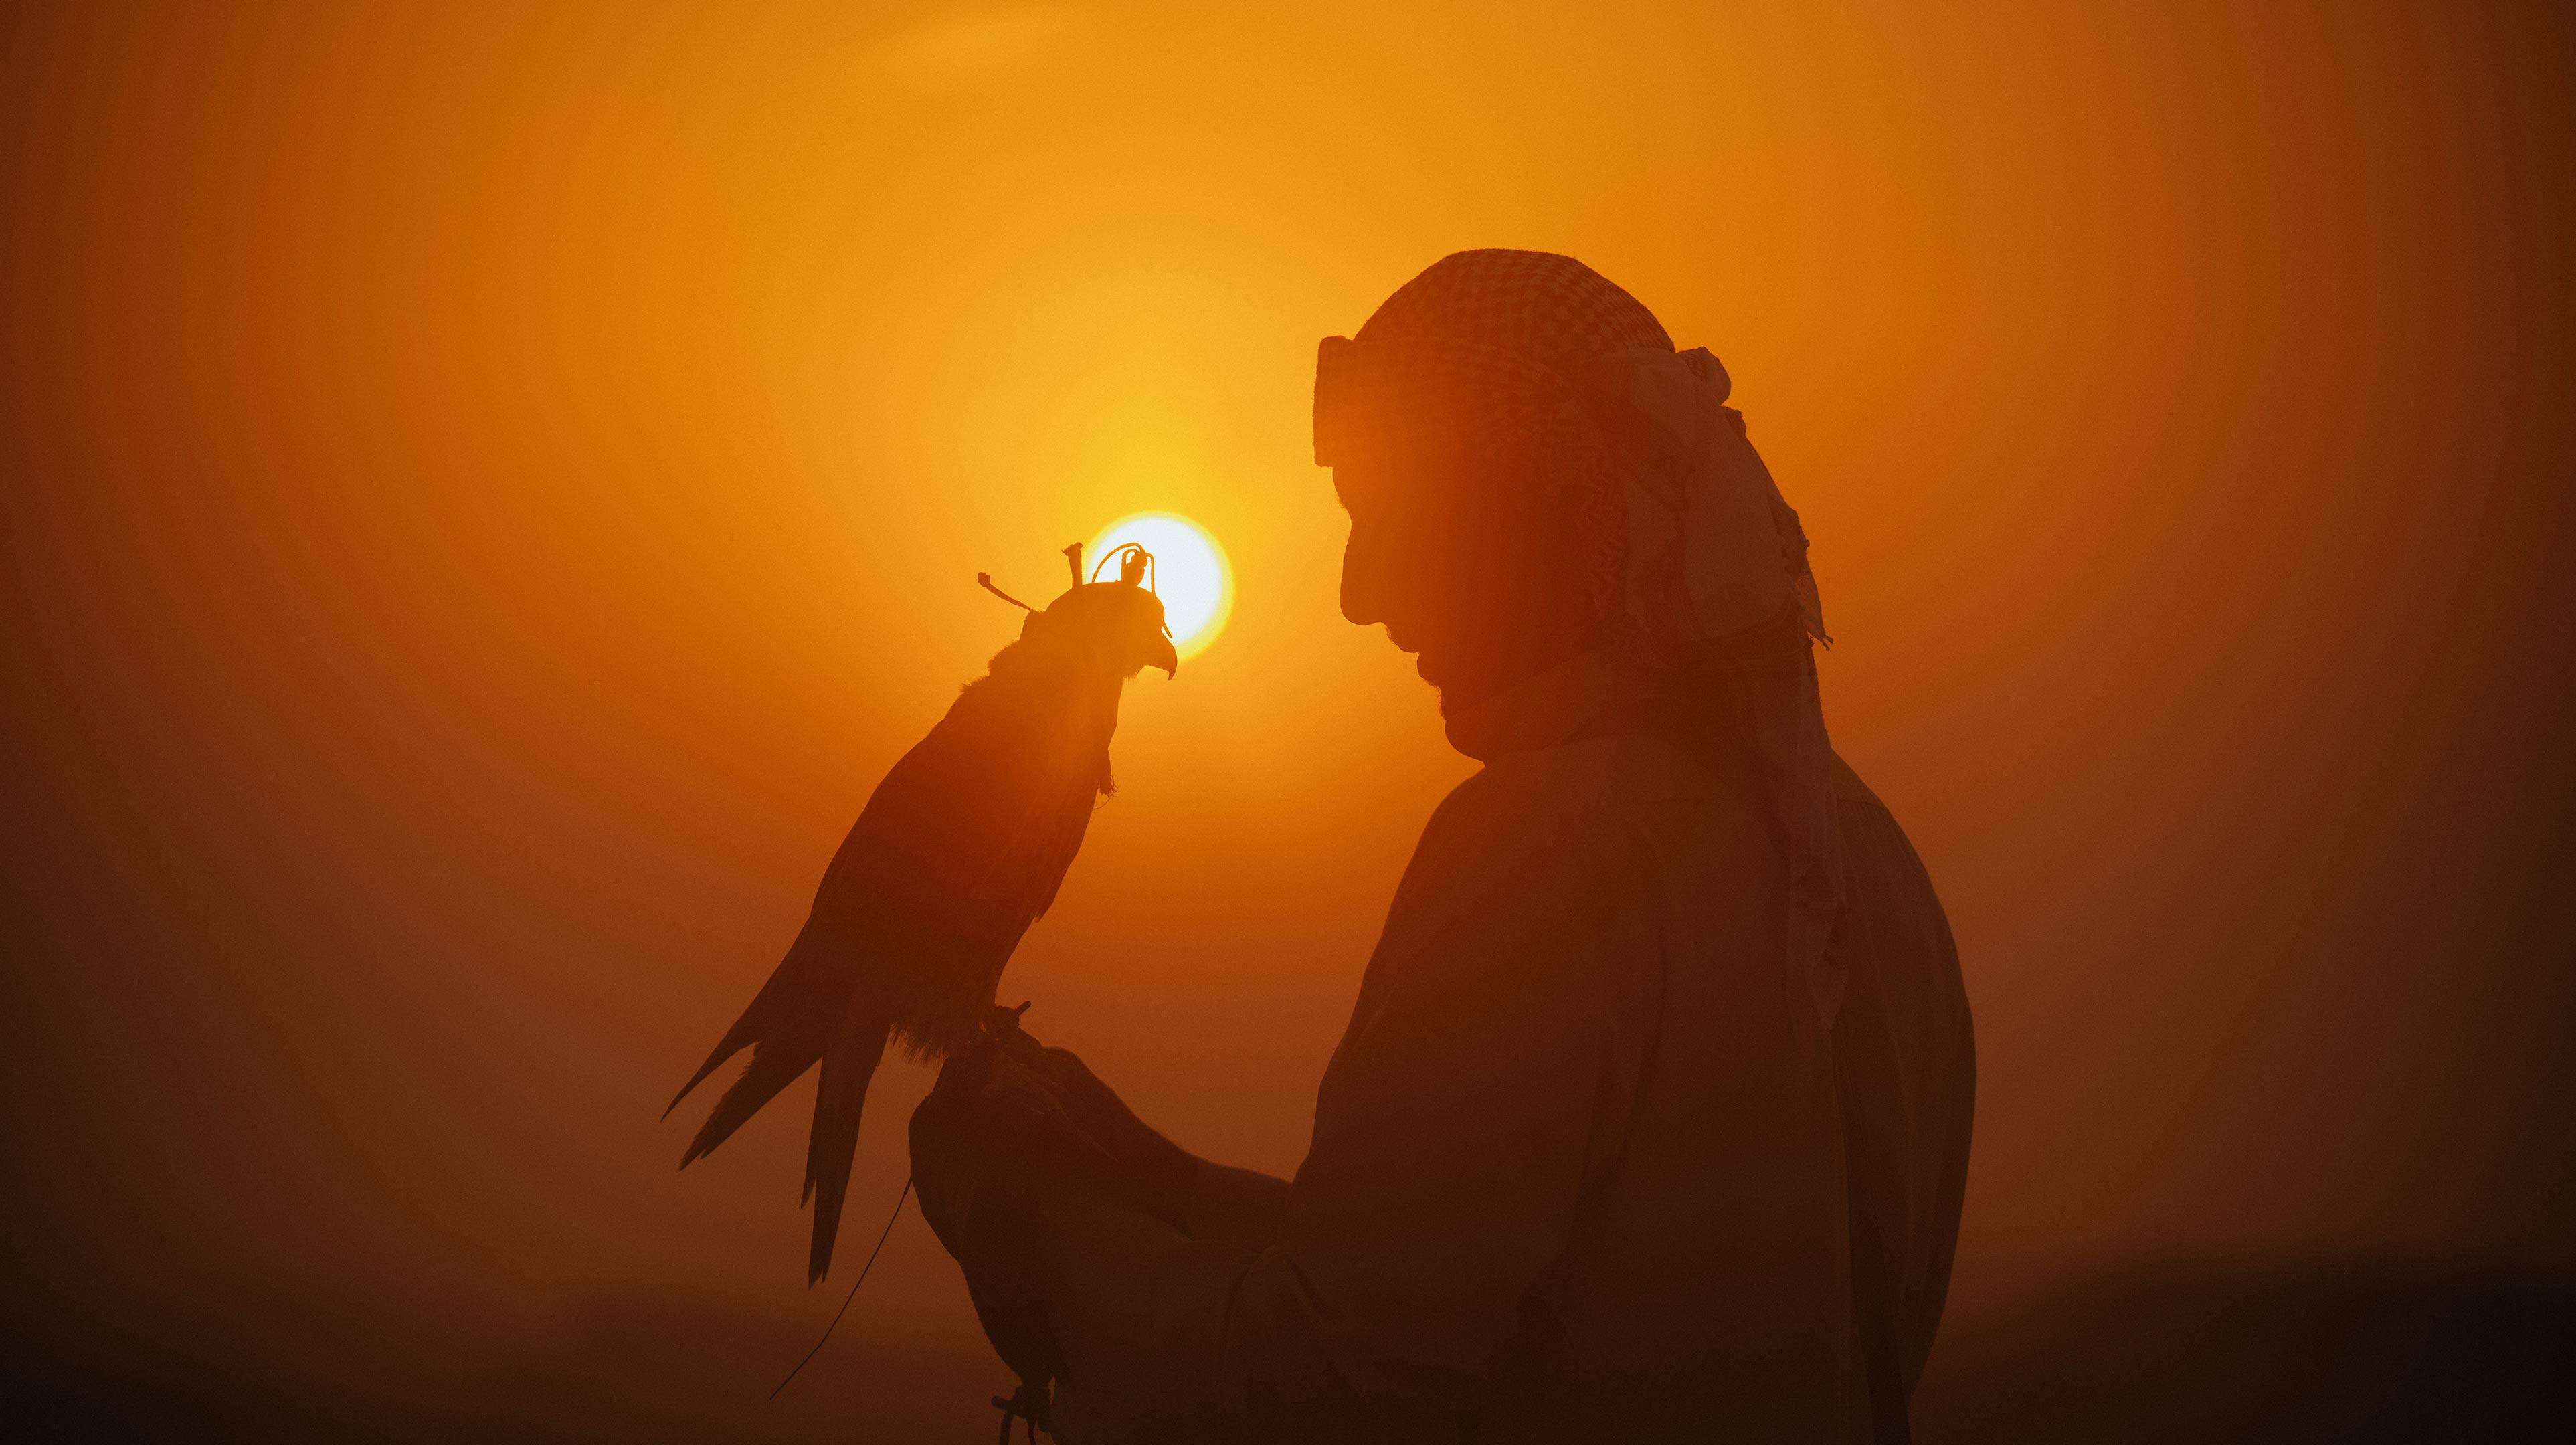 Emirati man holding falcon in the desert at sunset